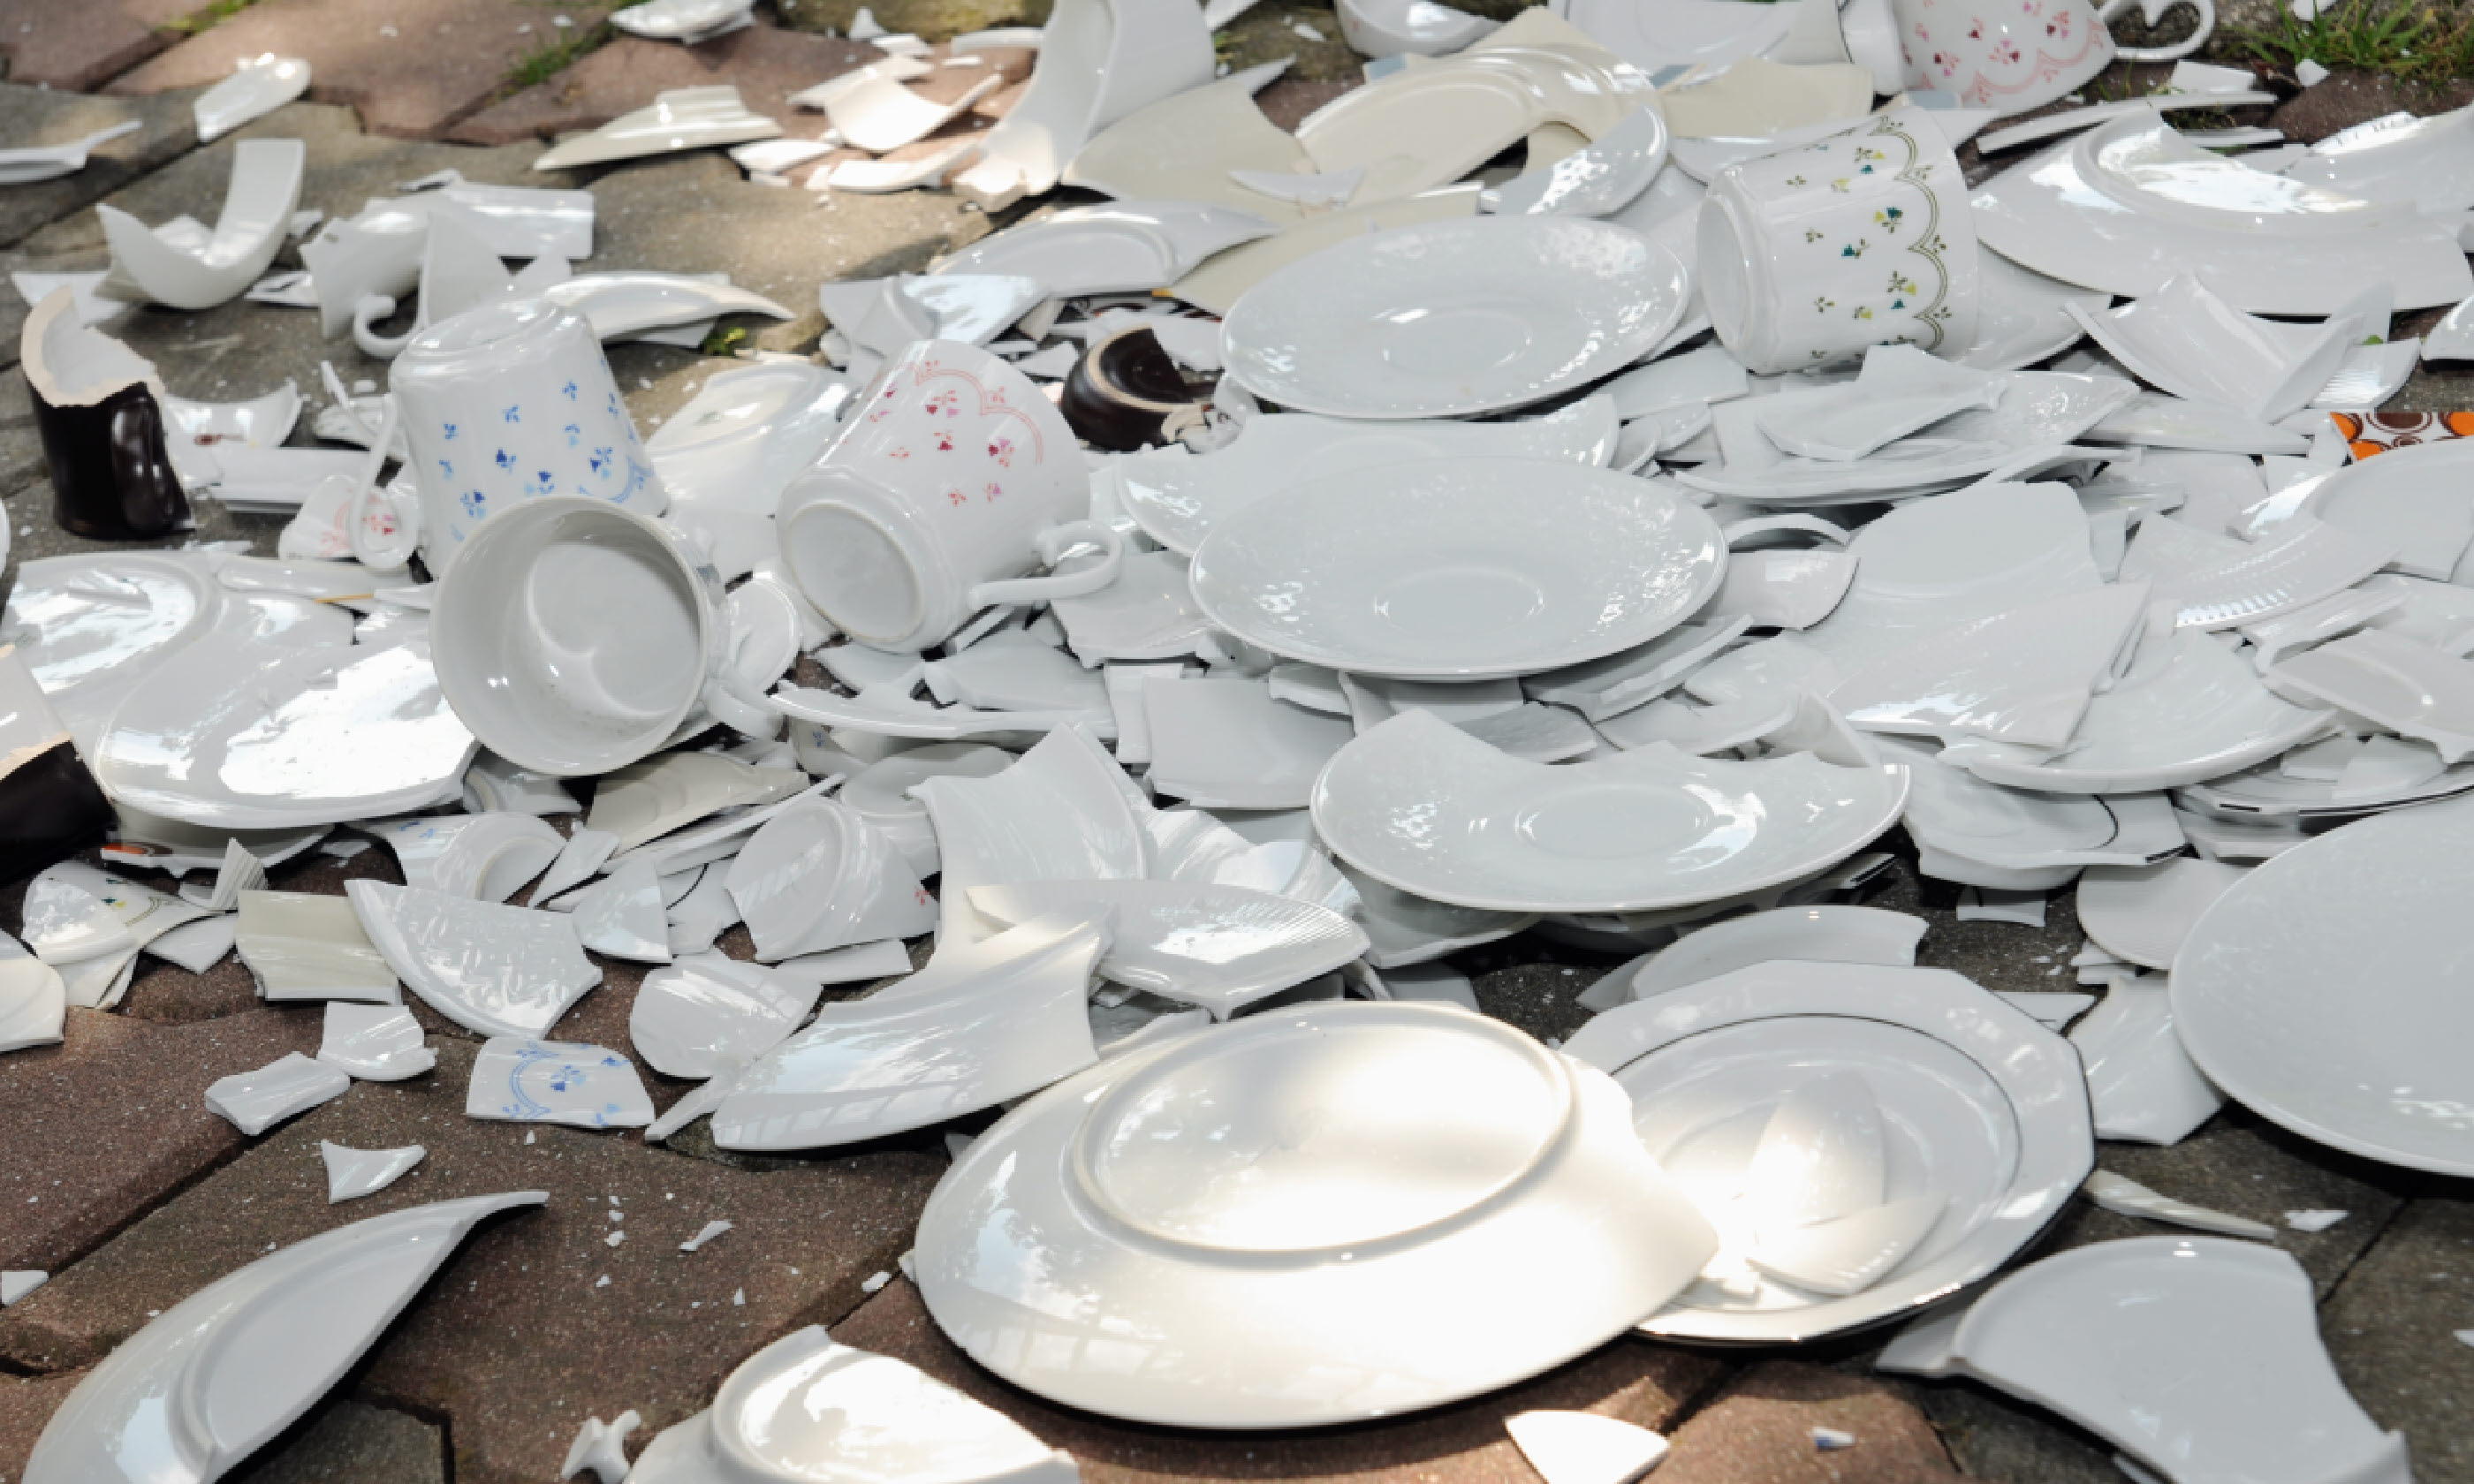 Broken plates (Shutterstock)